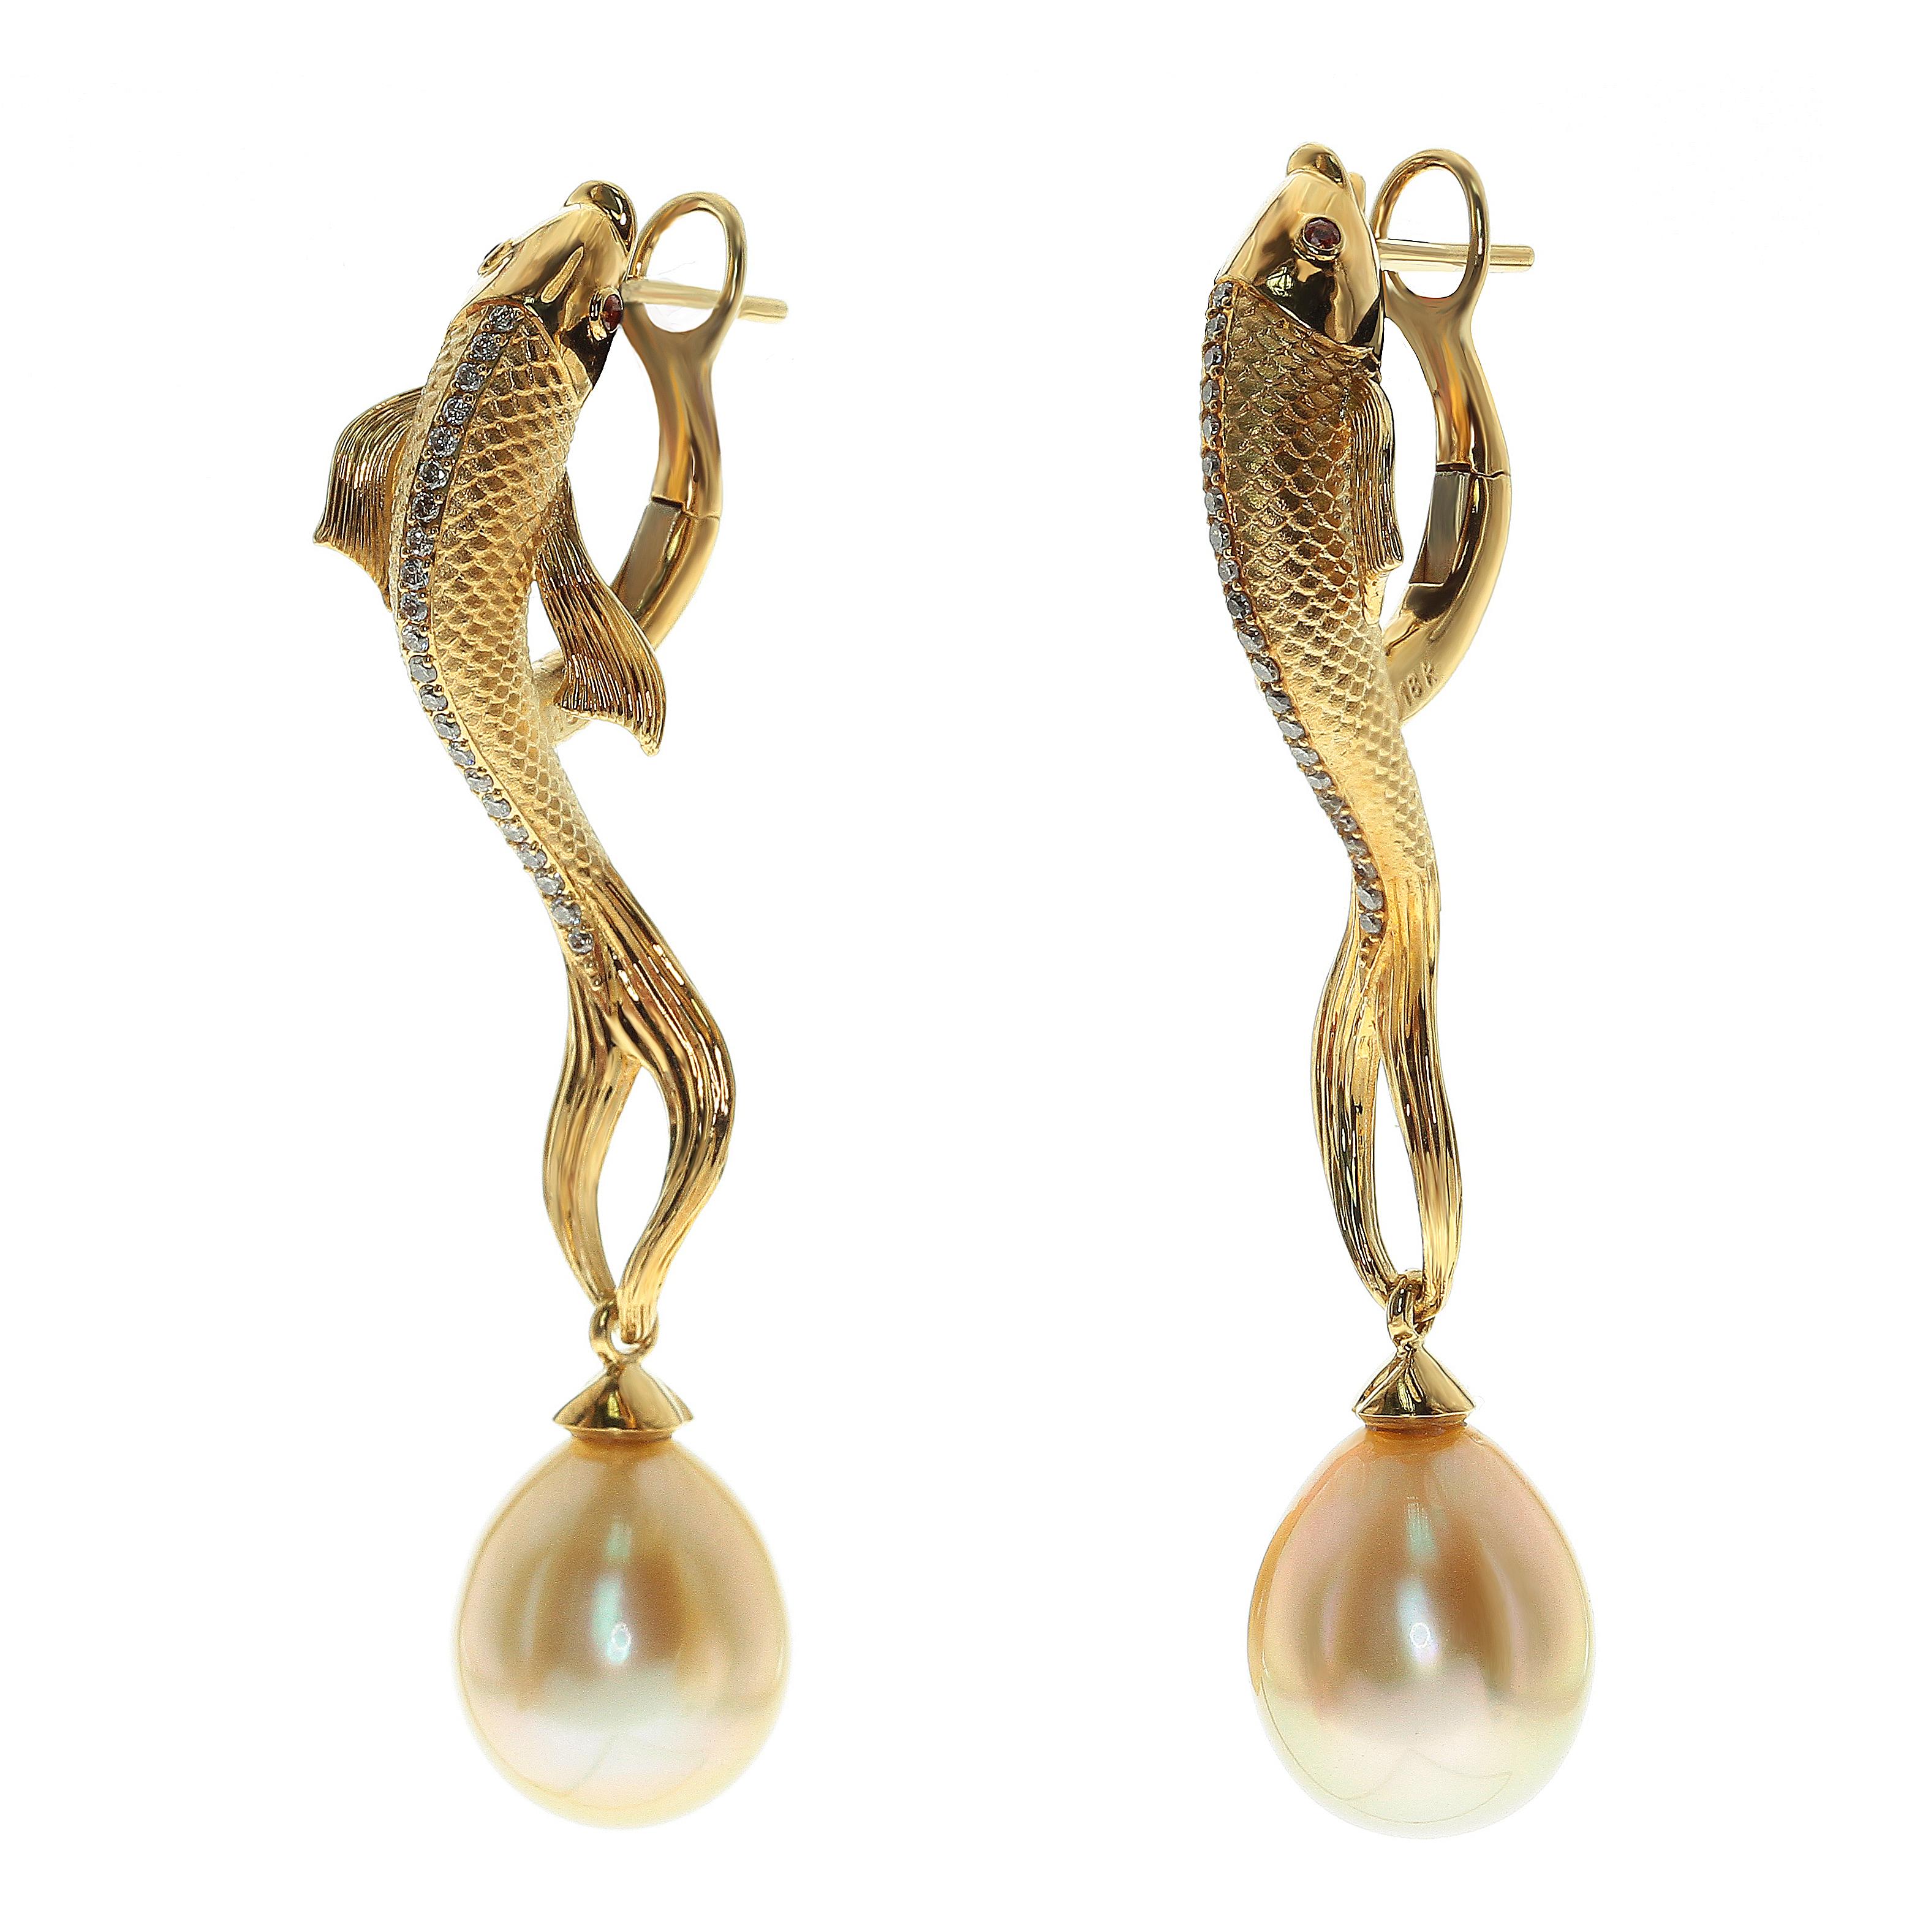 Fish Earrings - 48 For Sale on 1stDibs | fish earrings gold, koi fish  earrings, fish shaped earrings